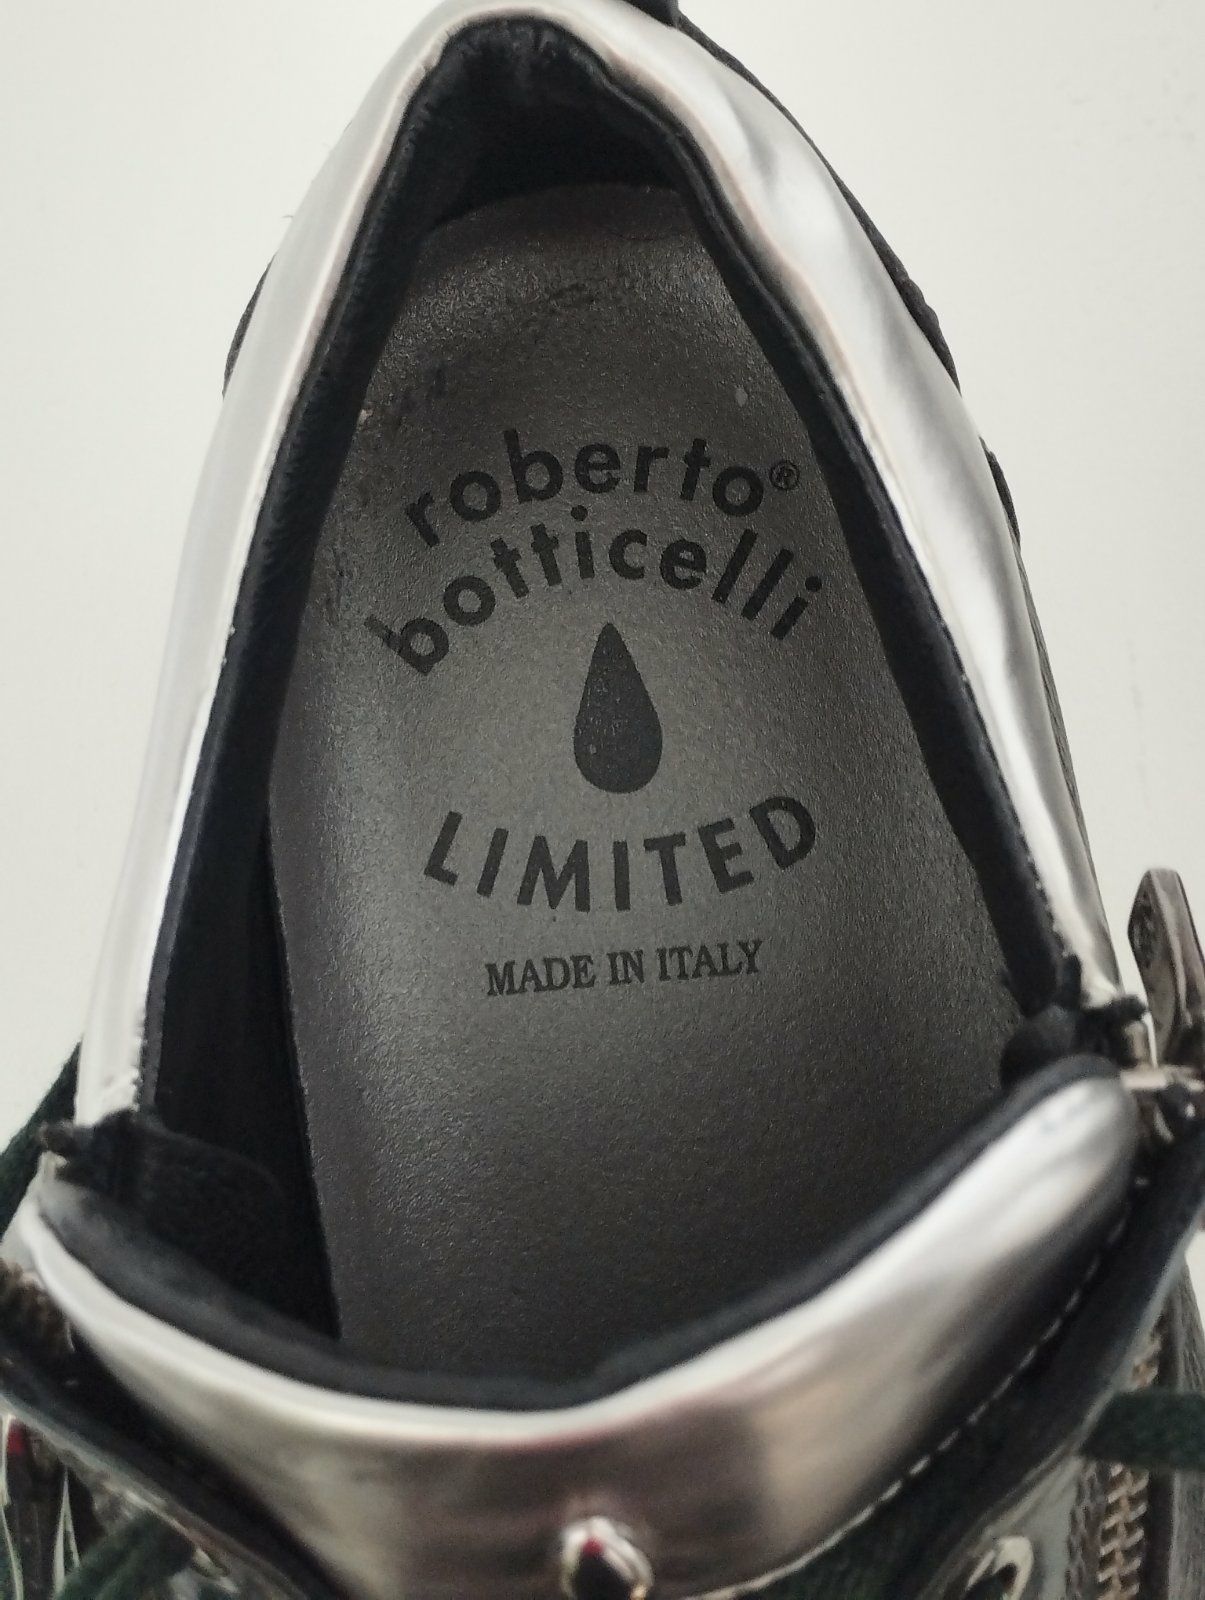 Roberto Botticelli Limited